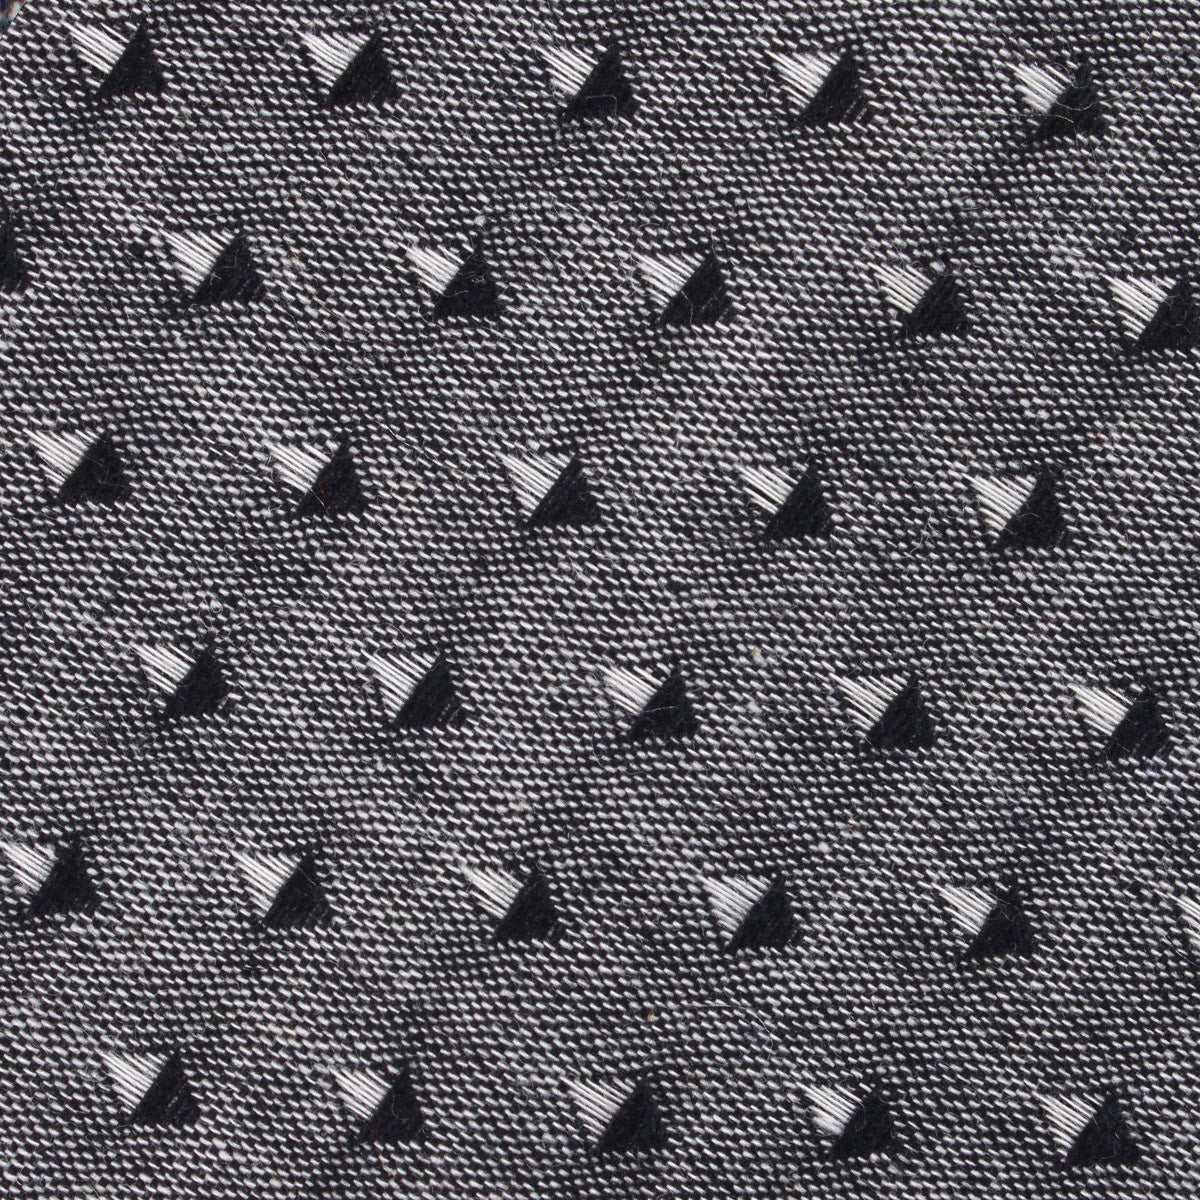 Inception Black Linen Fabric Self Diamond Bowtie